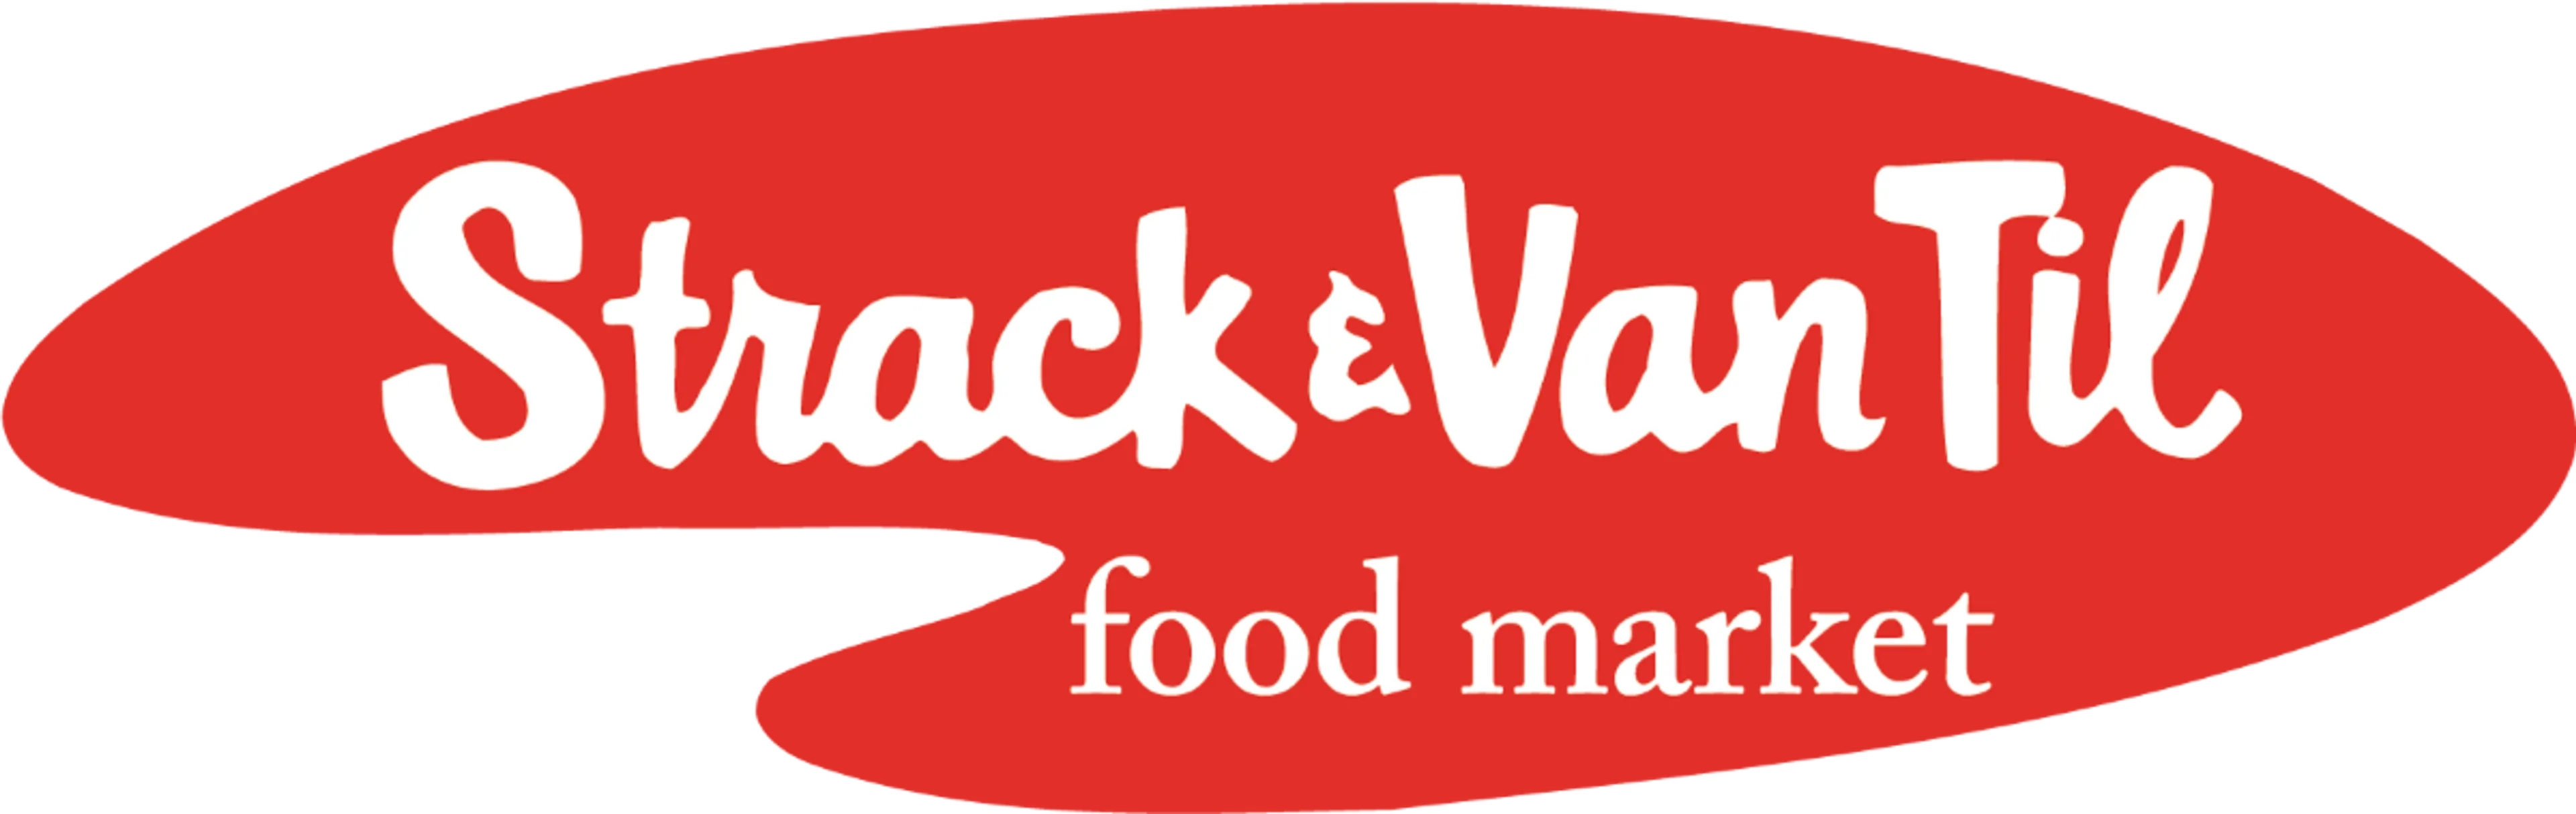 STRACK & VAN TIL logo